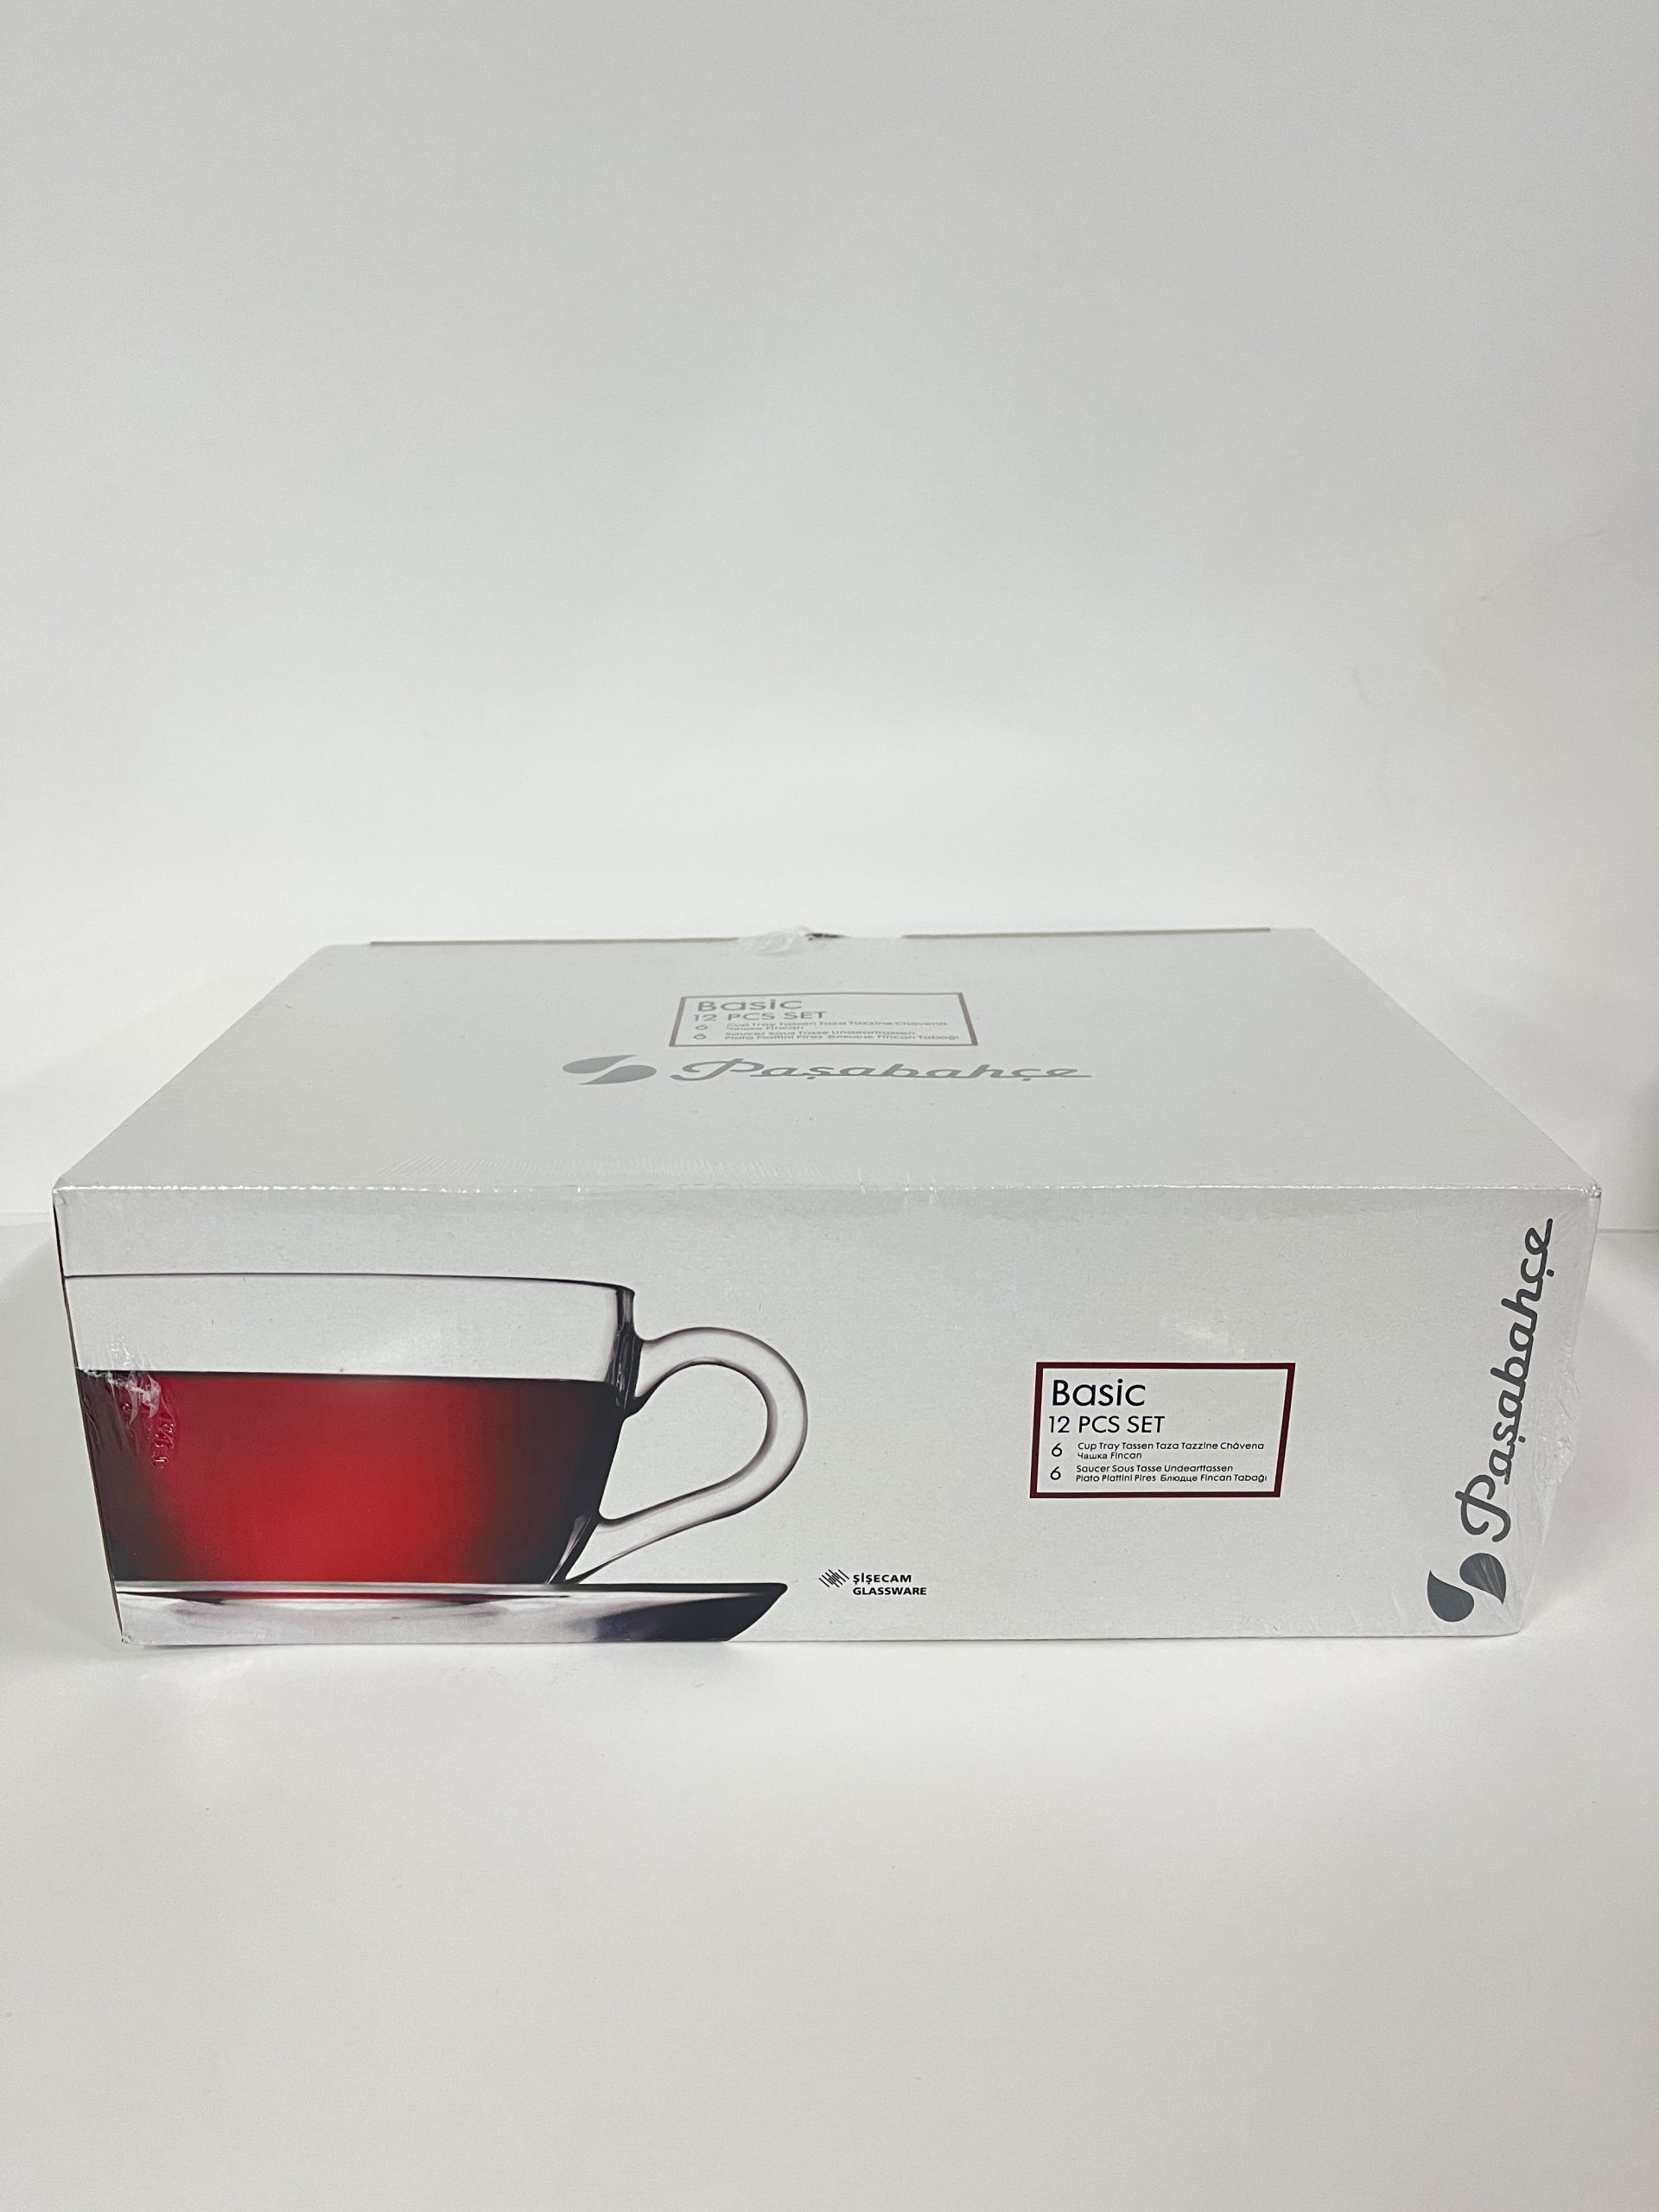 Pasabahce G4U Clear Glass Coffee Tea Cups with Handle, Coffee Tea Service Mugs Set of 6, 4.75 oz, Size: One Size